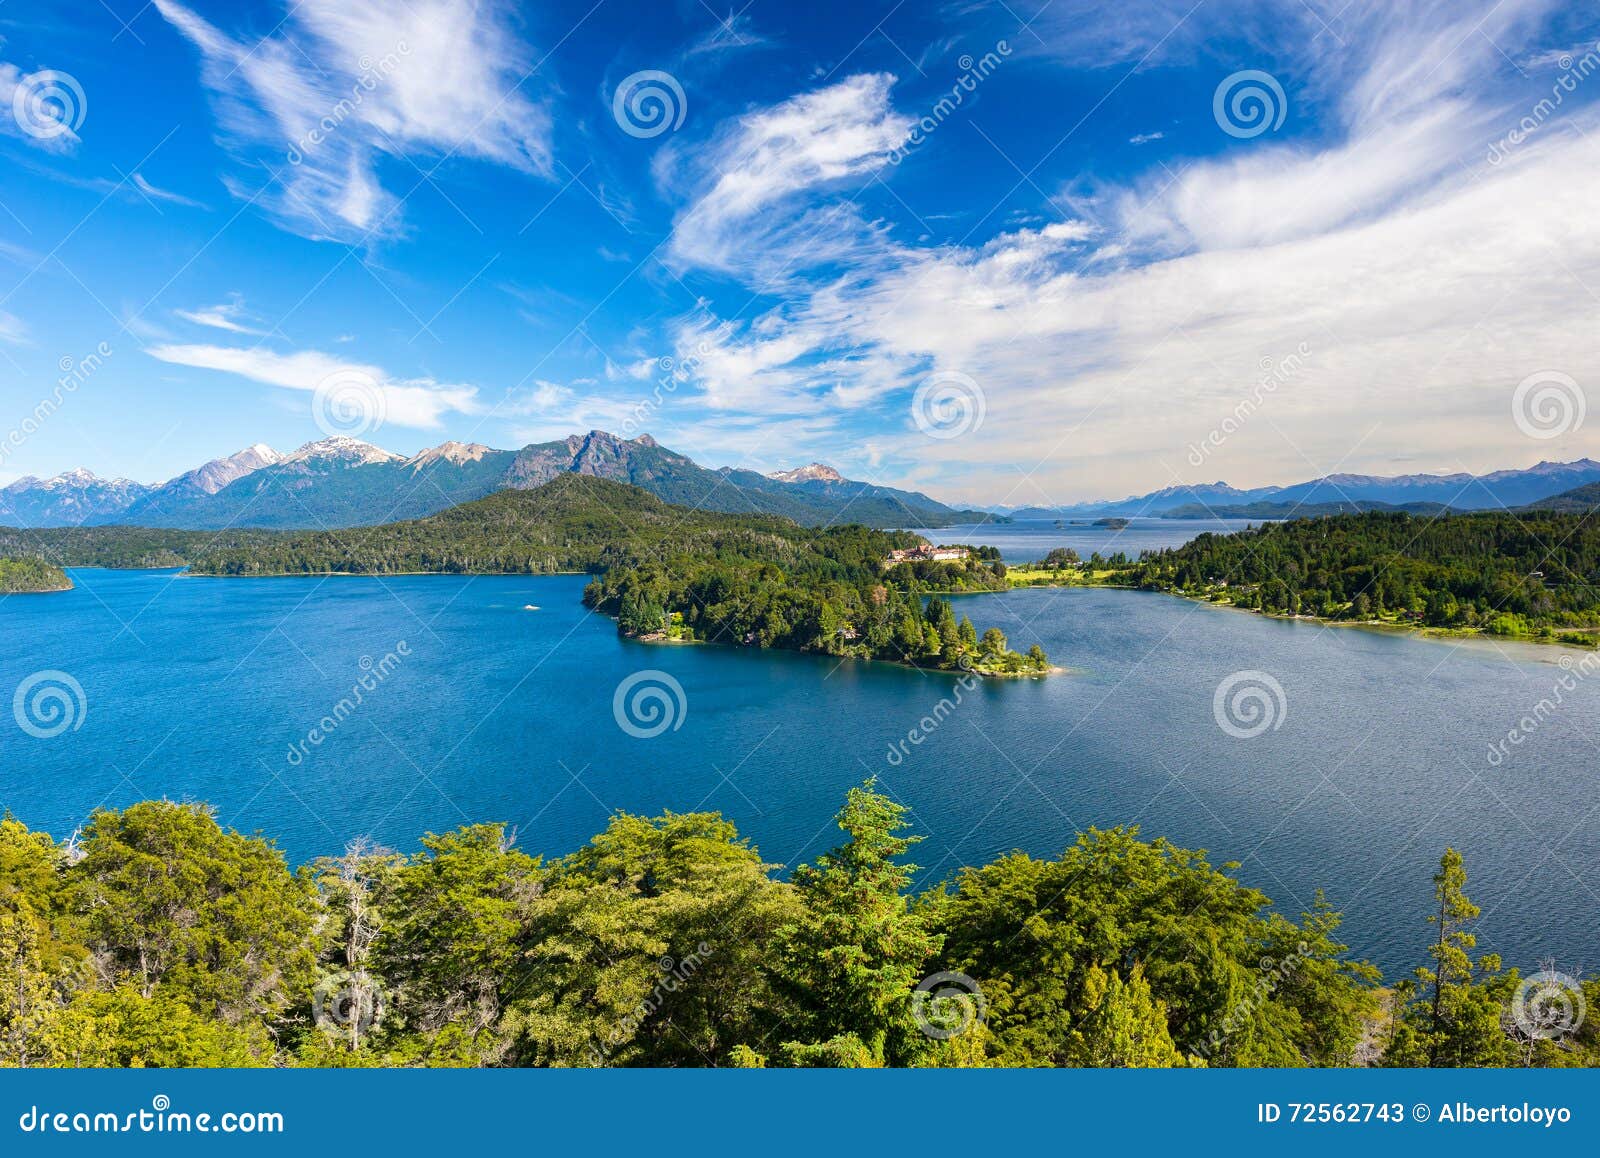 nahuel huapi lake, san carlos de bariloche, argentina